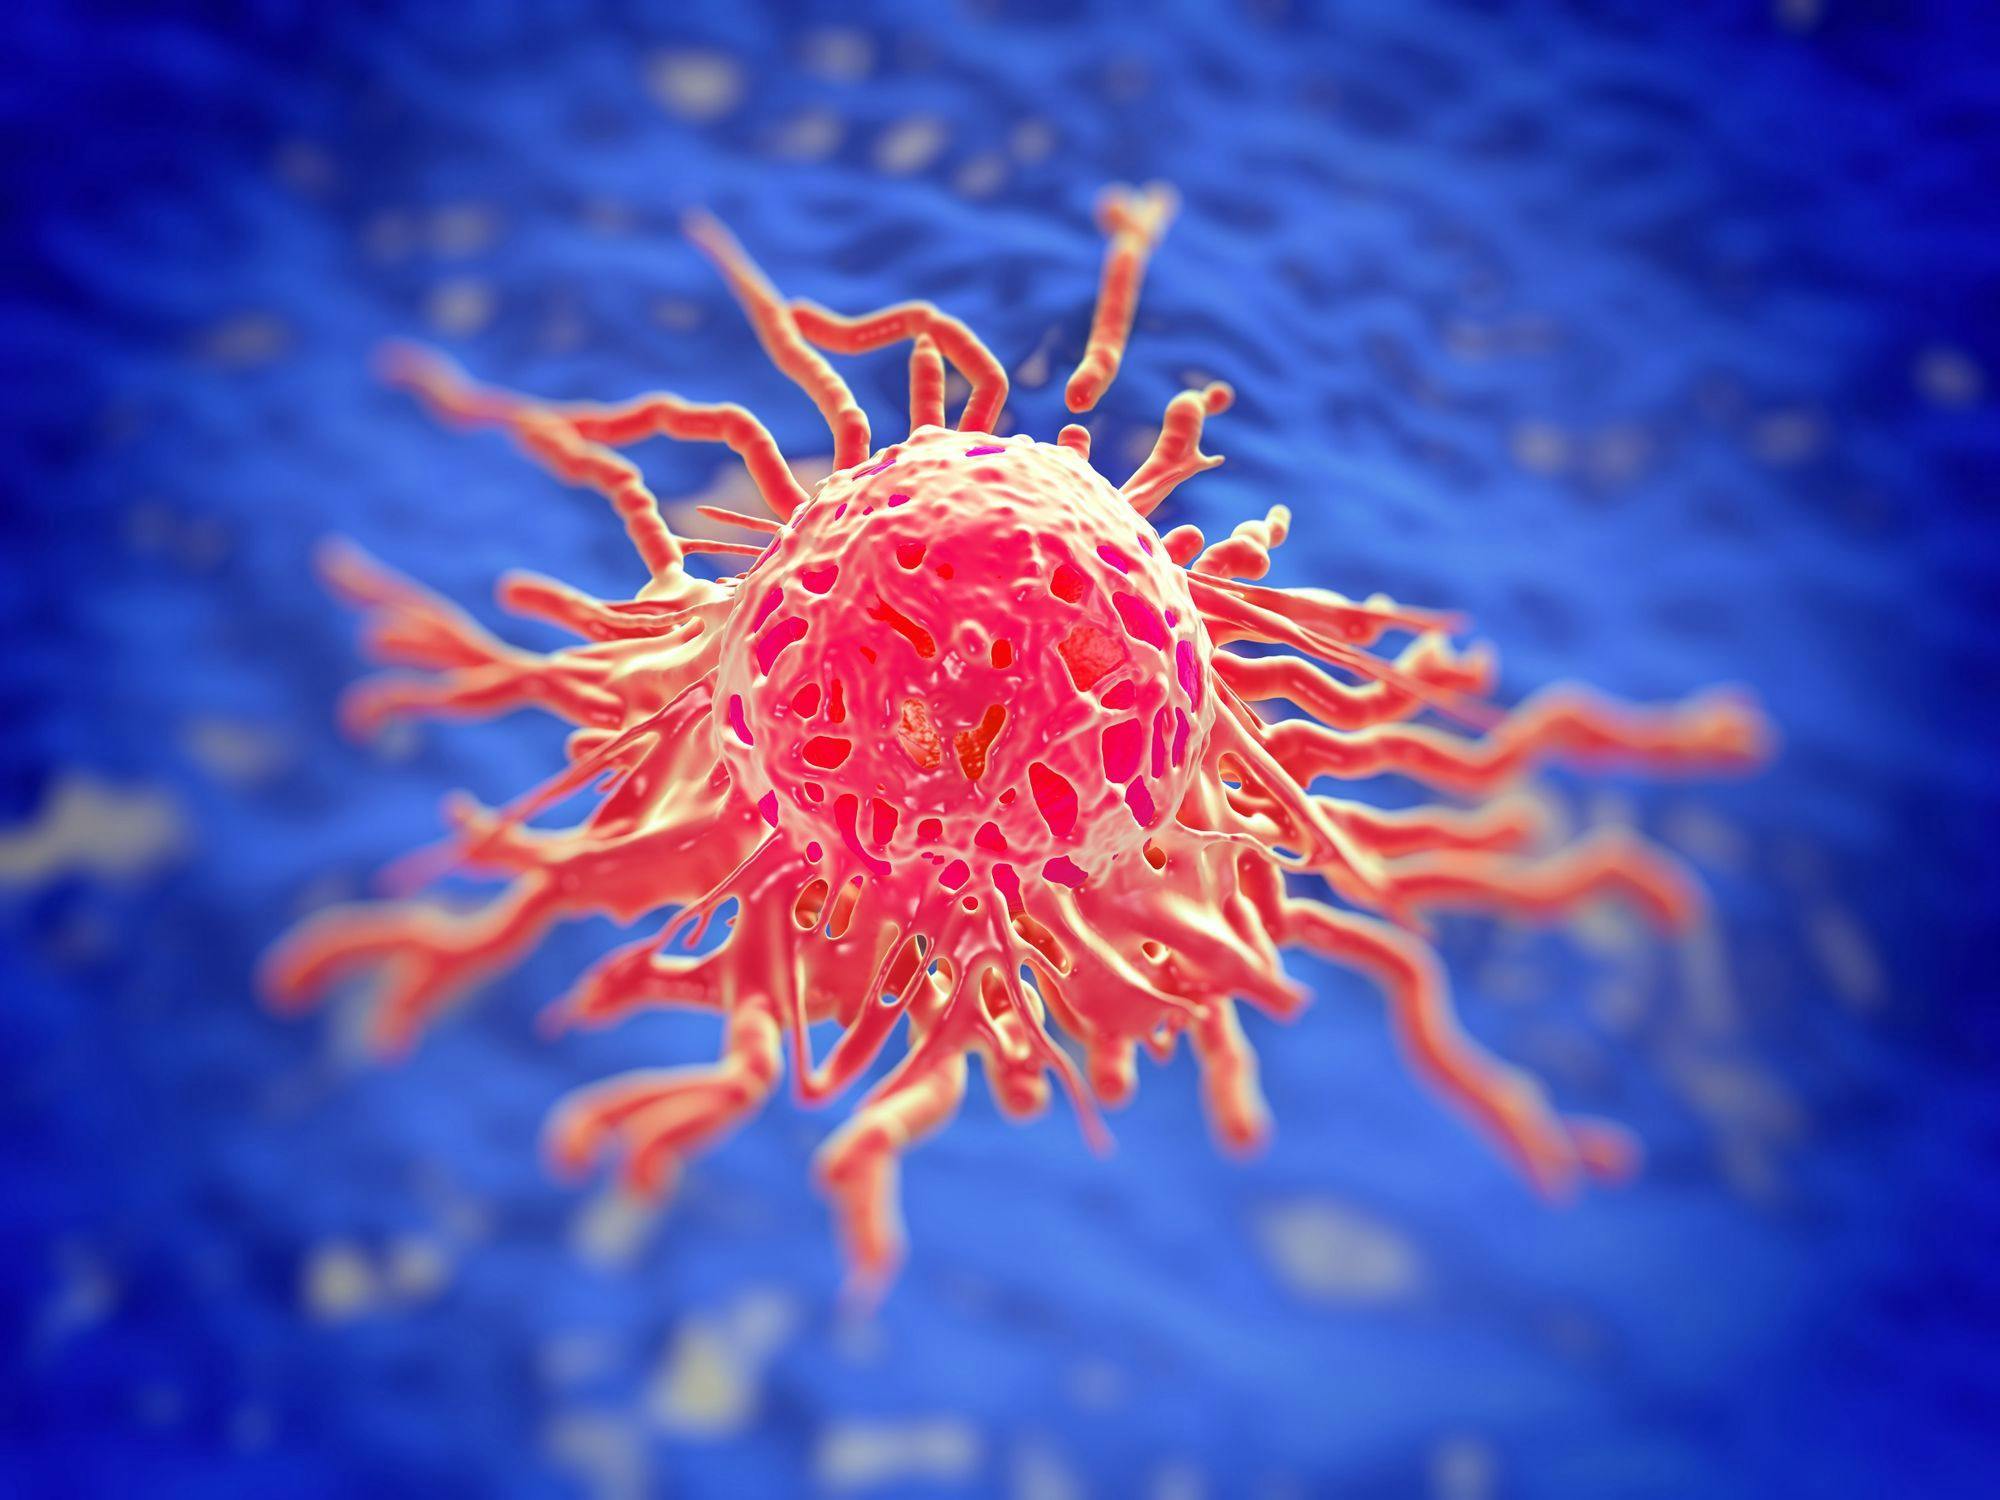 Immune Checkpoint Inhibitors Change Treatment Landscape for Metastatic Cervical Cancer